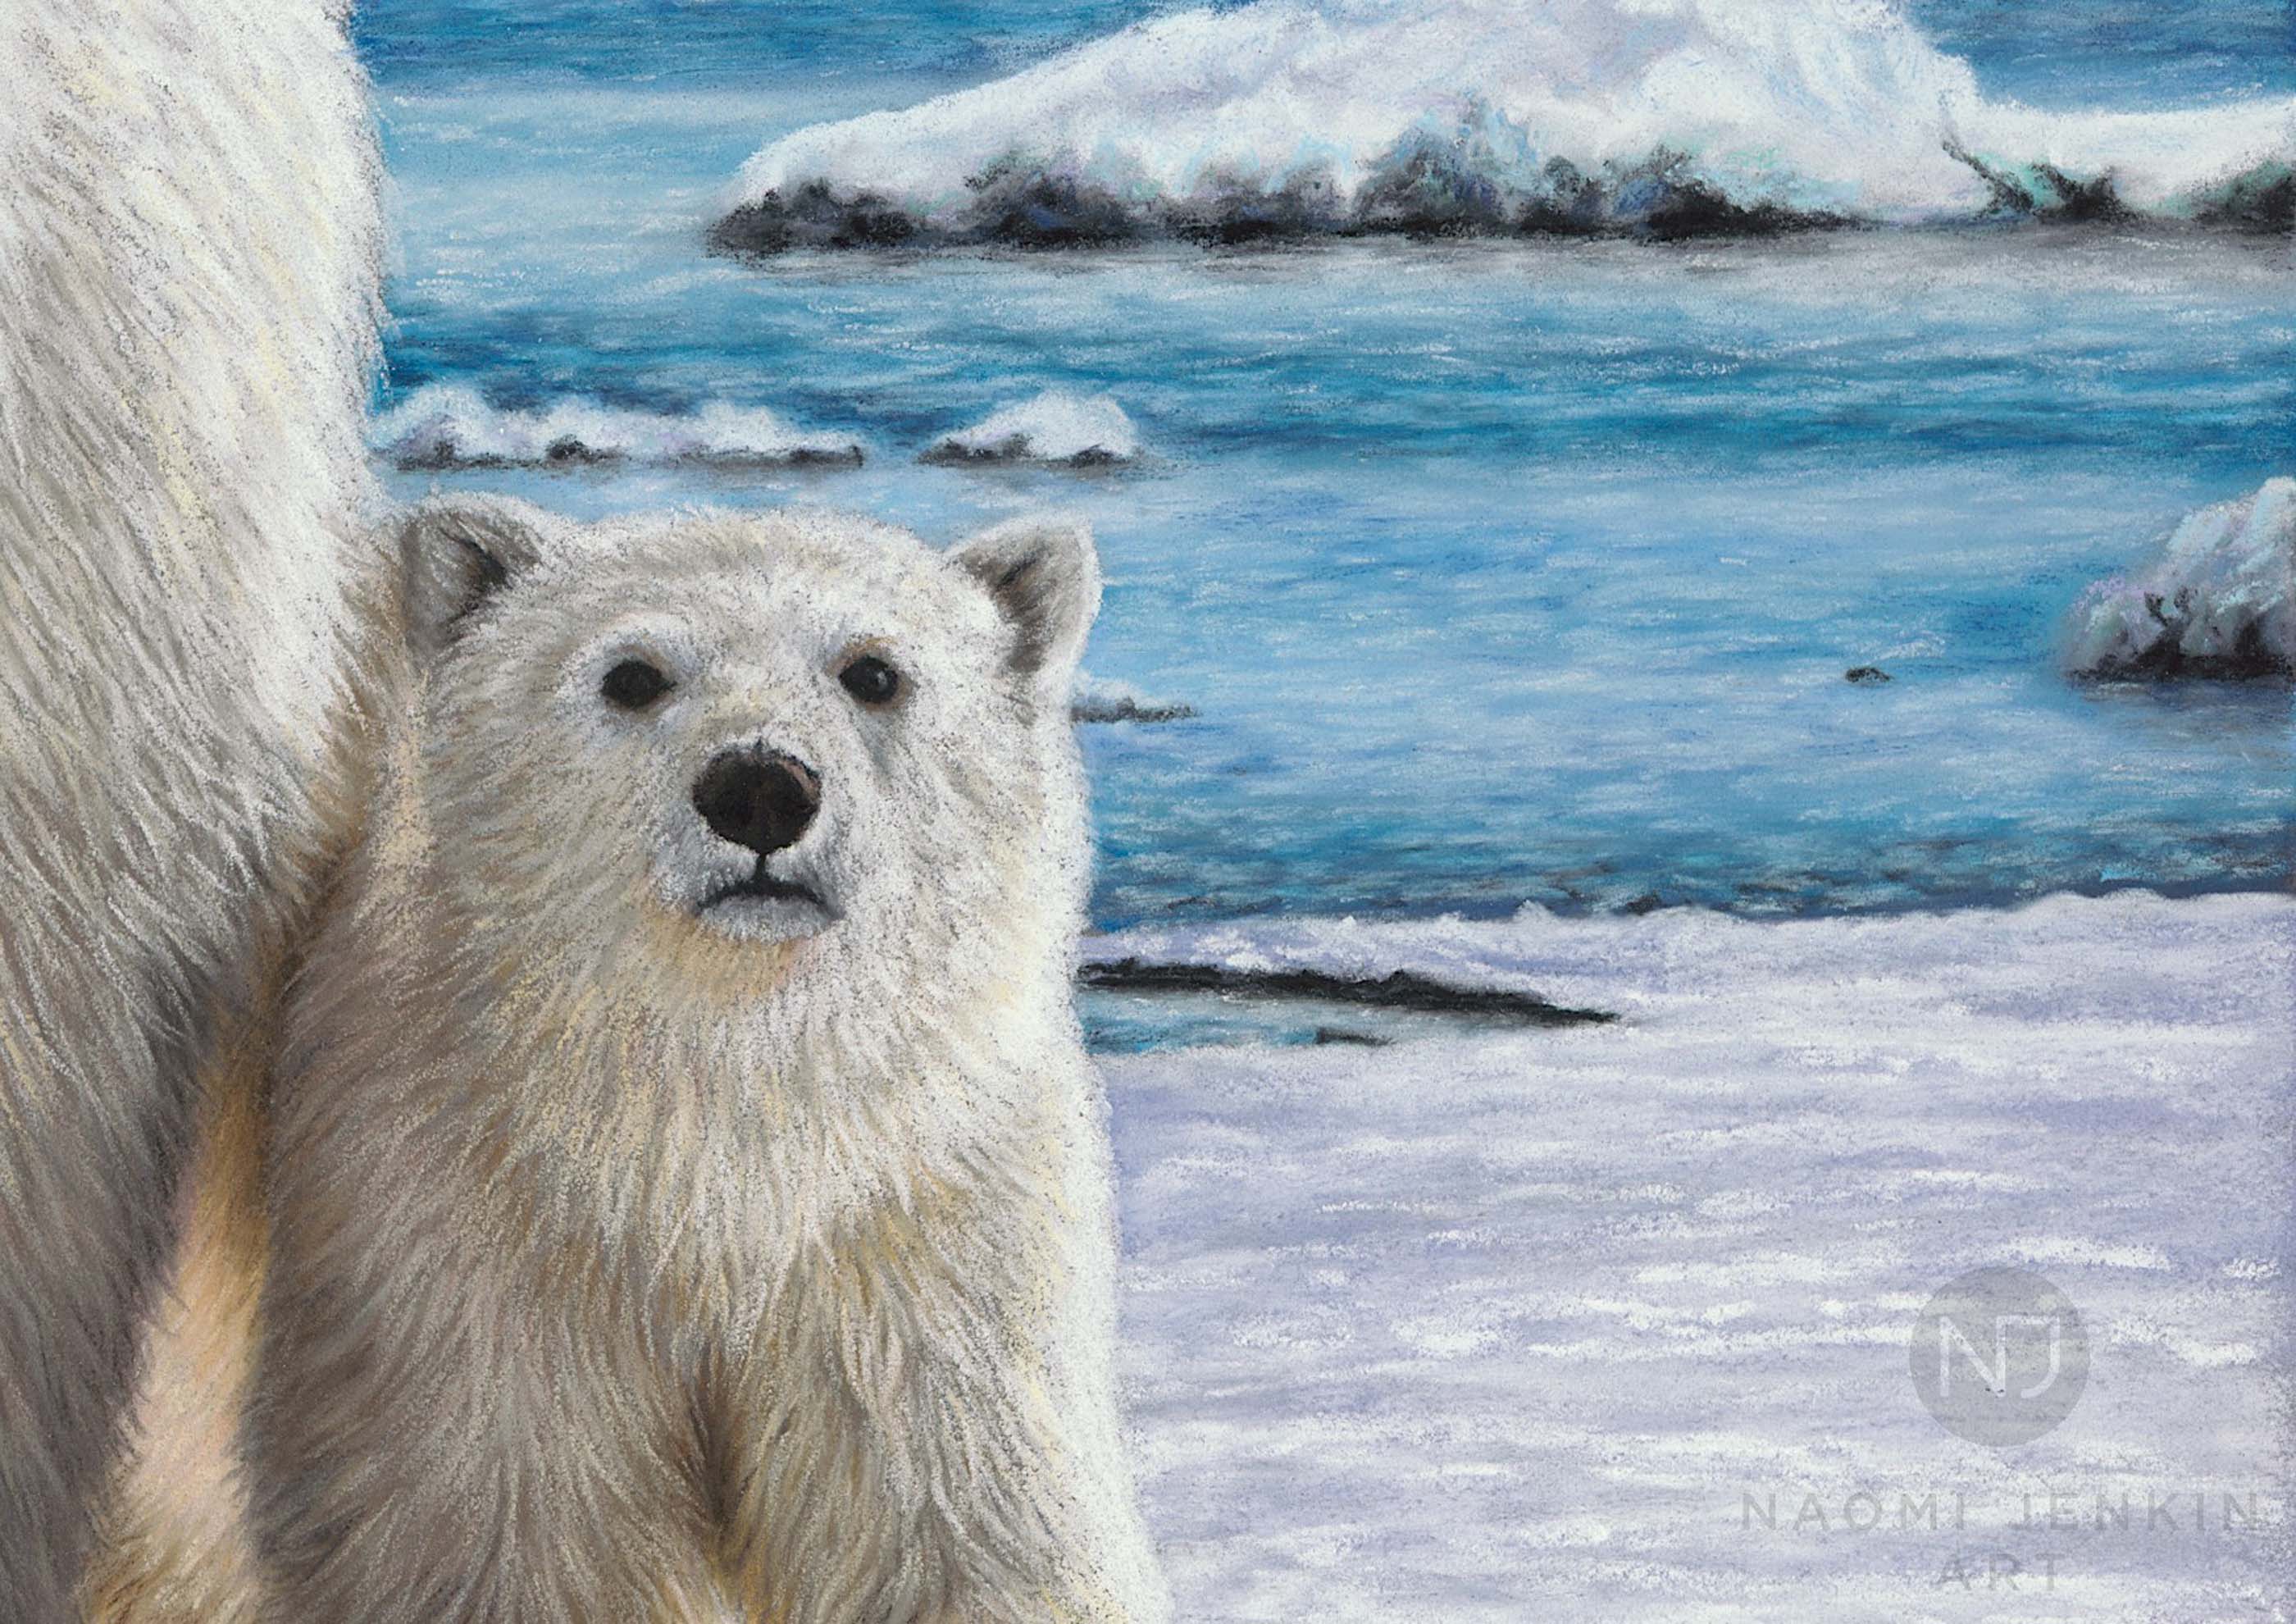 Close up of polar bear drawing by wildlife artist Naomi Jenkin.